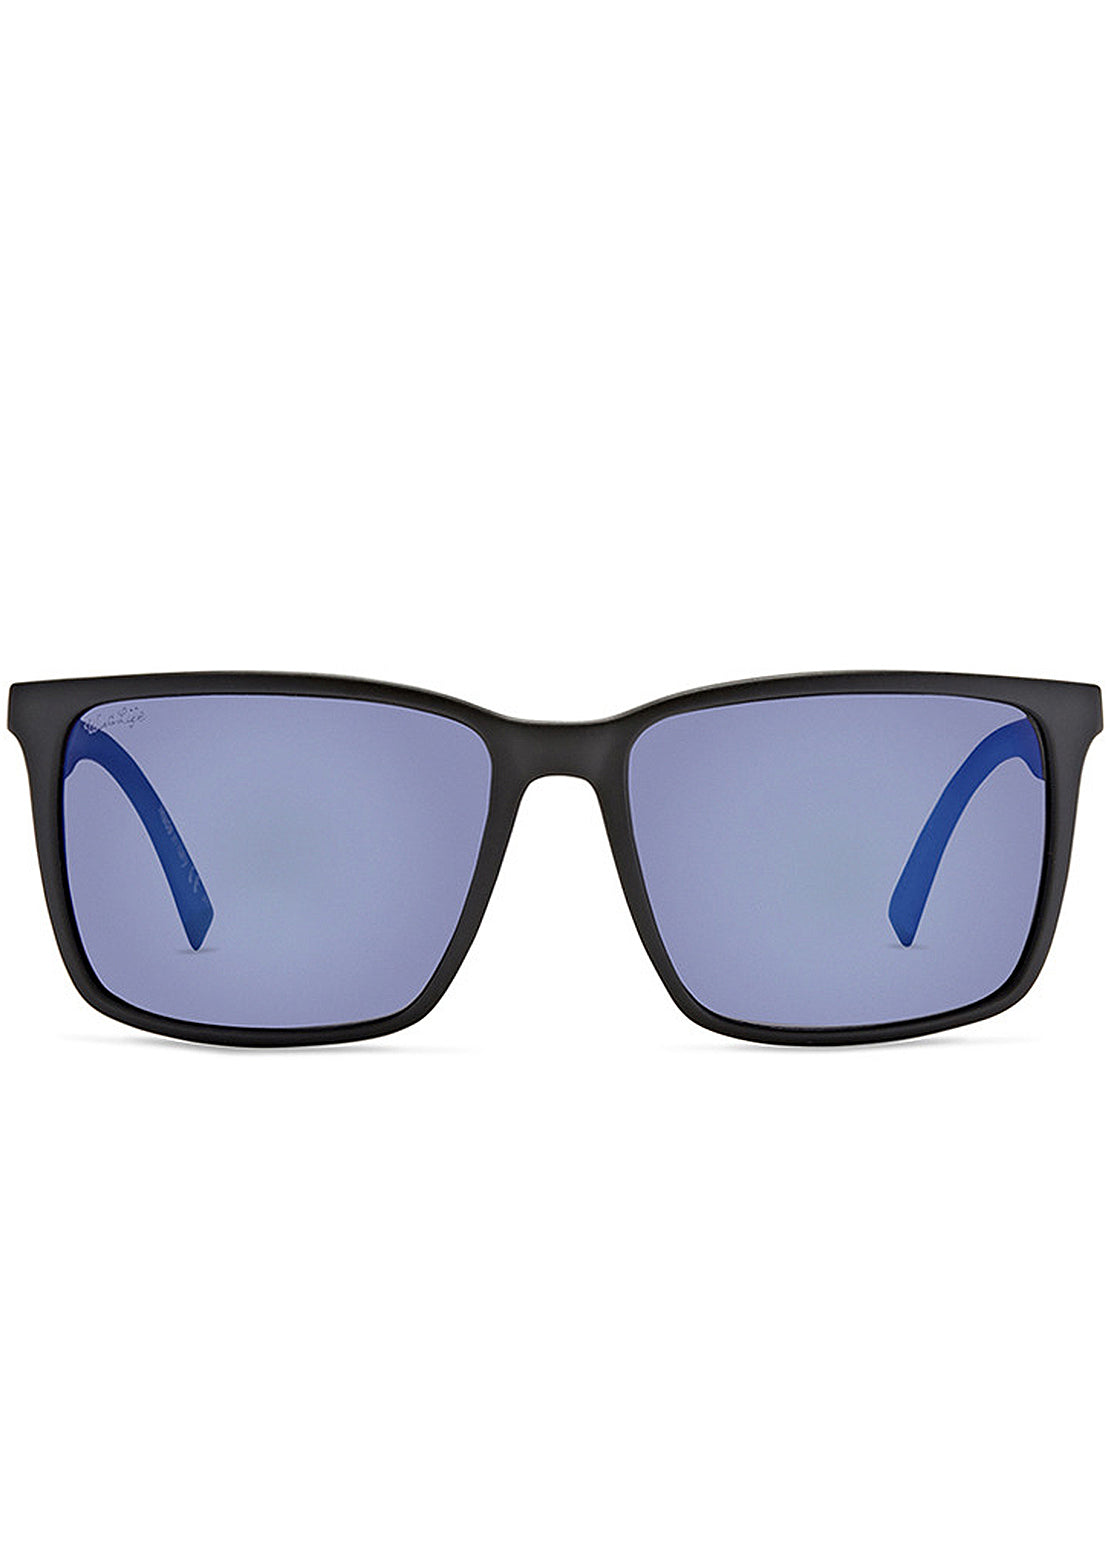 Von Zipper Men&#39;s Lesmore Polarized Sunglasses Black Satin/Blue FLSH Polarized